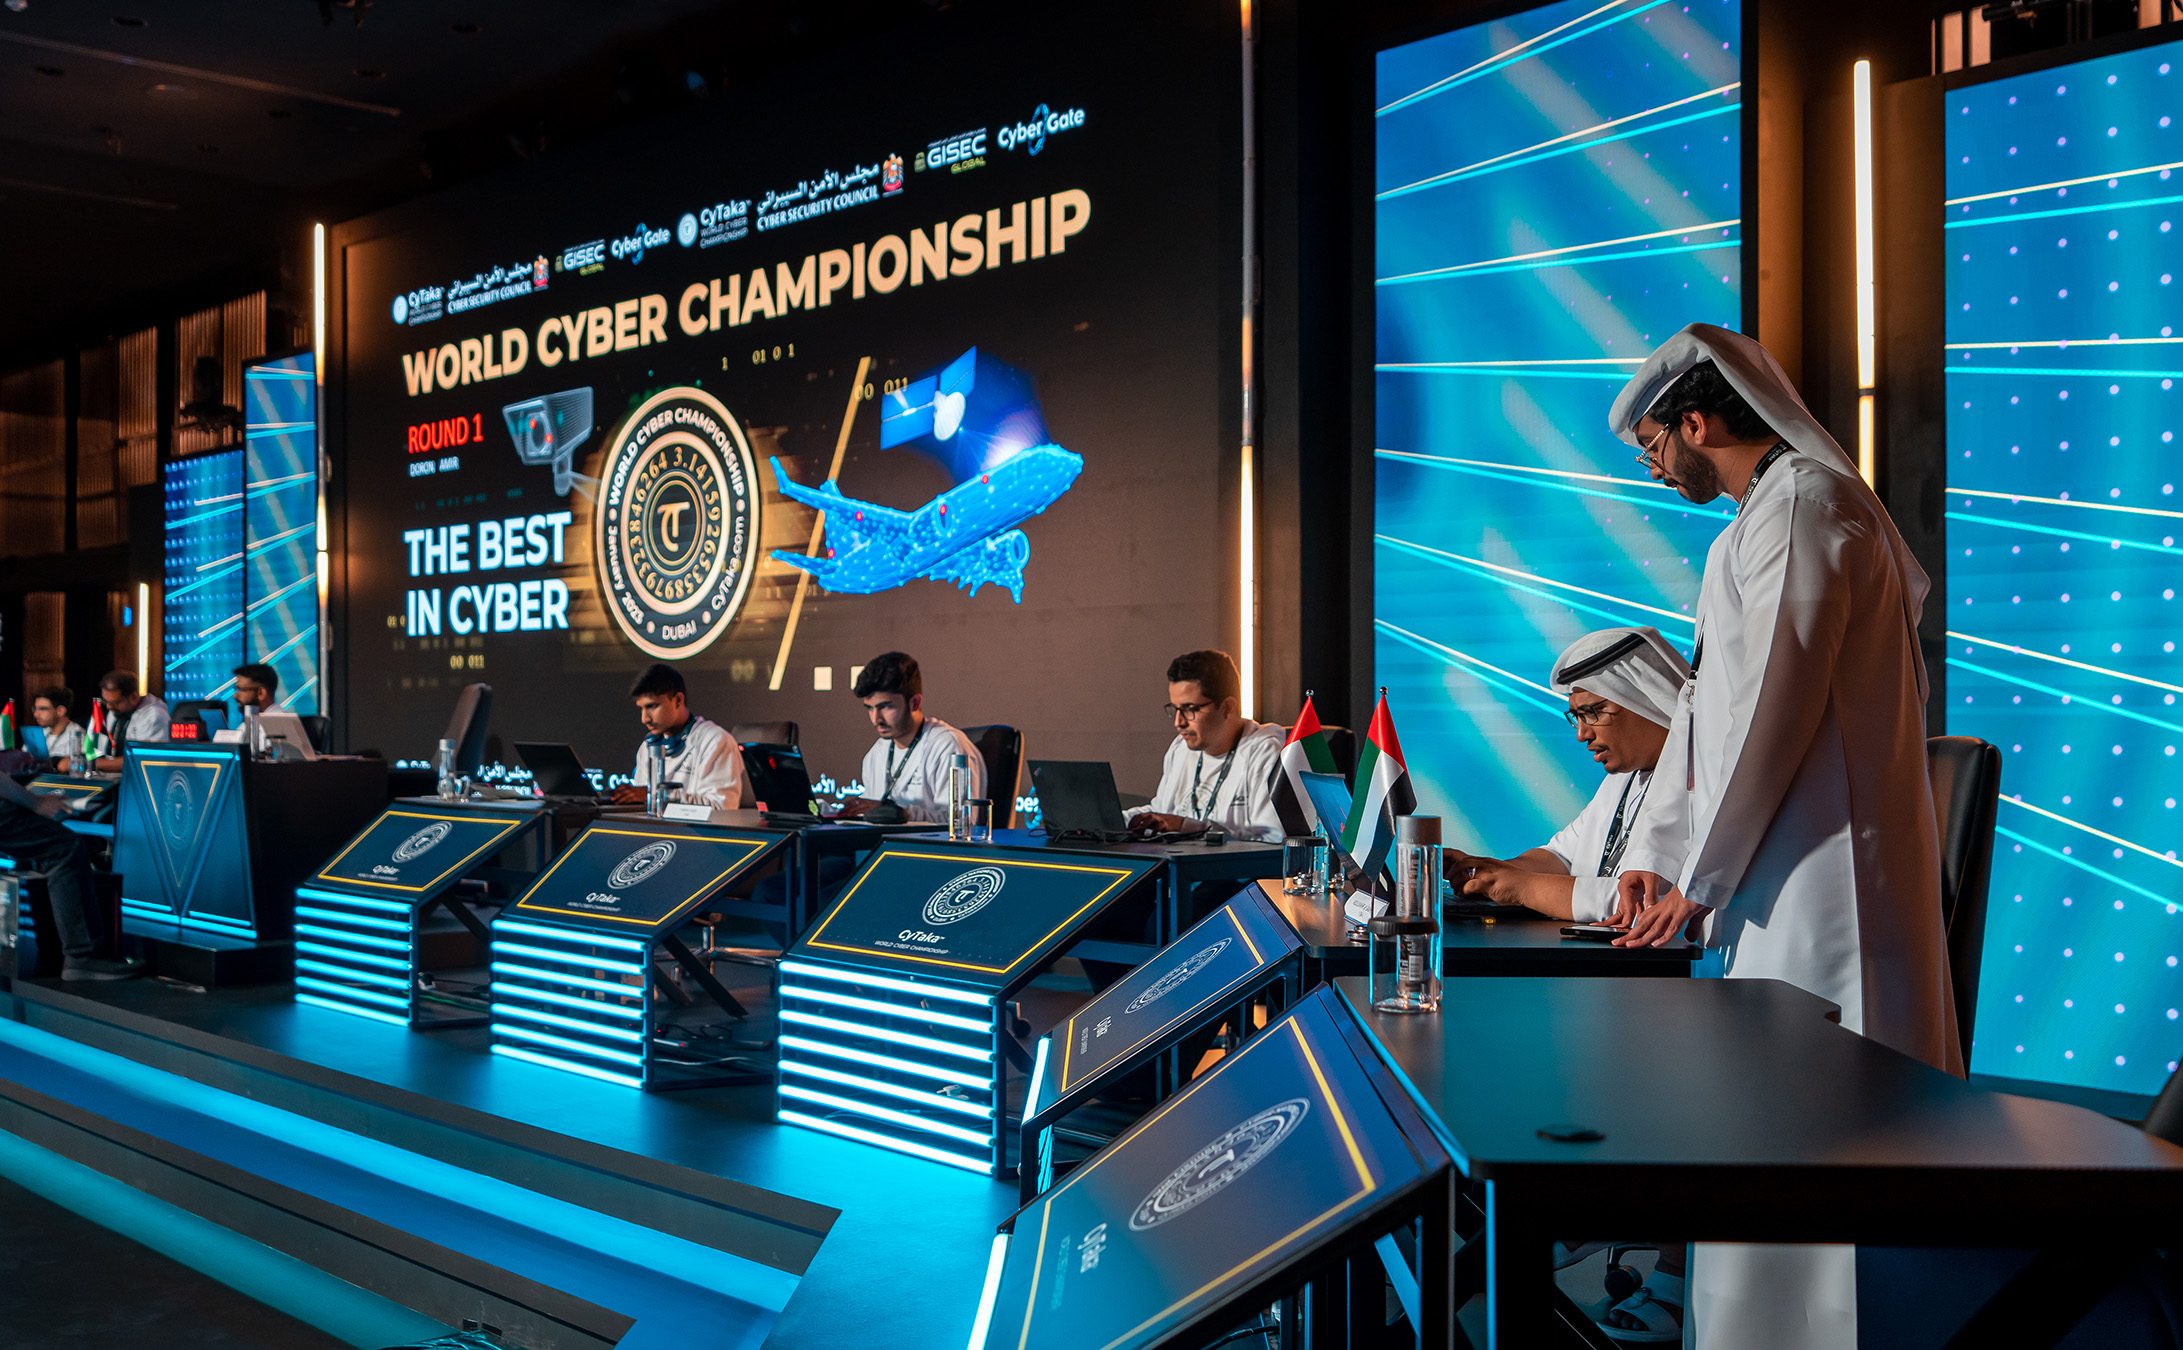 Organizing the World Cyber Championship